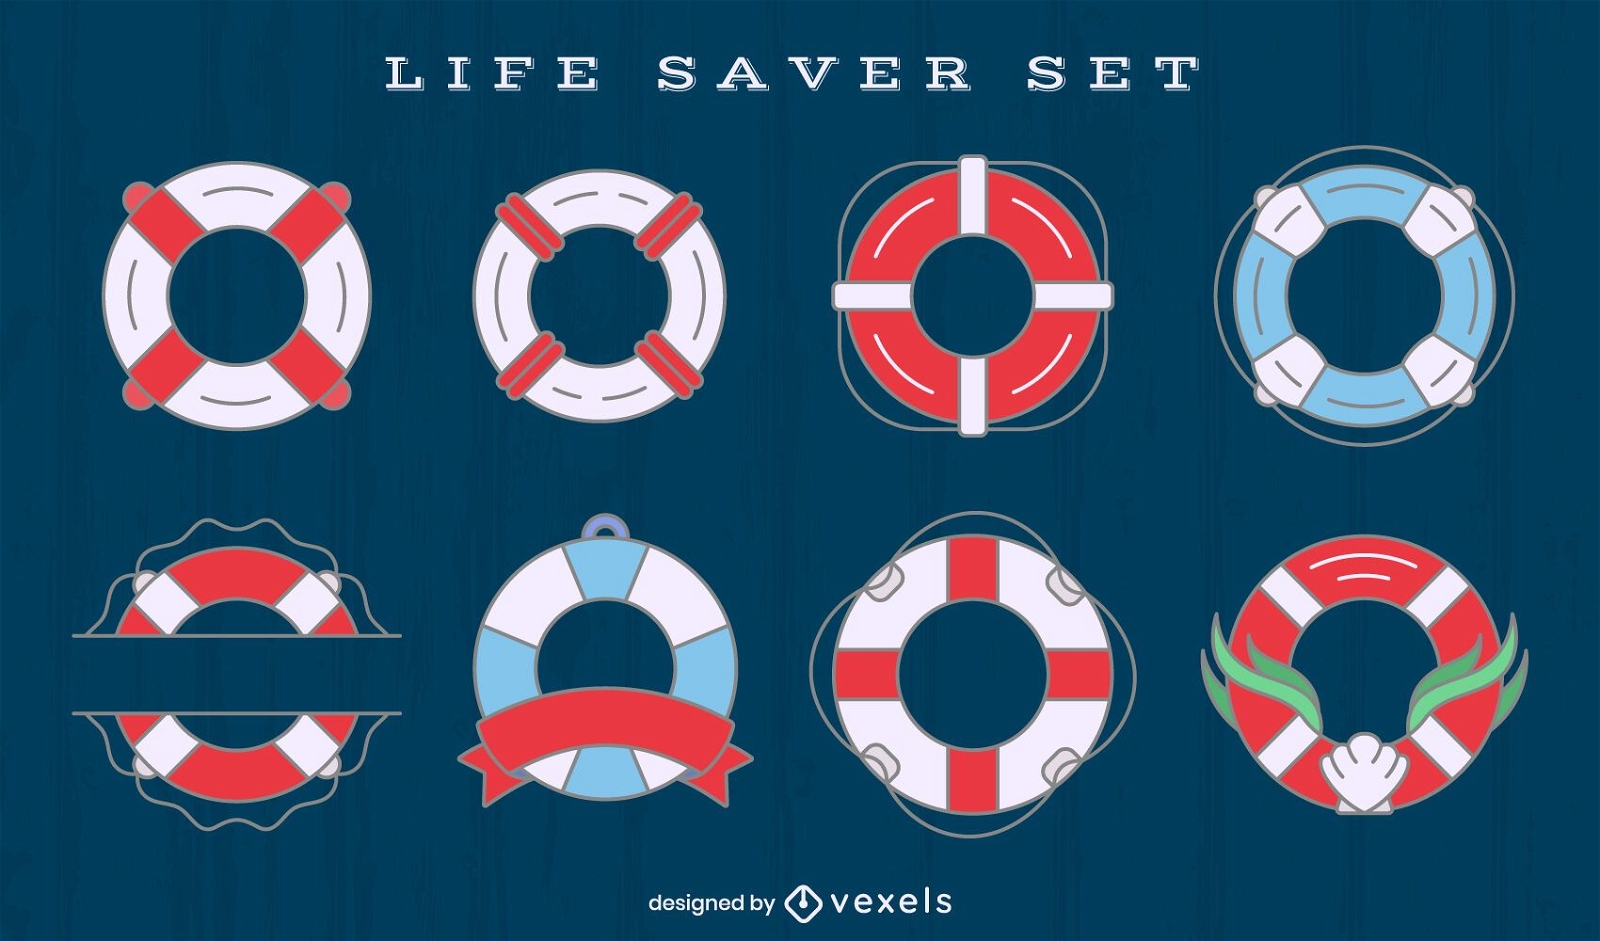 Life saver float rings element set